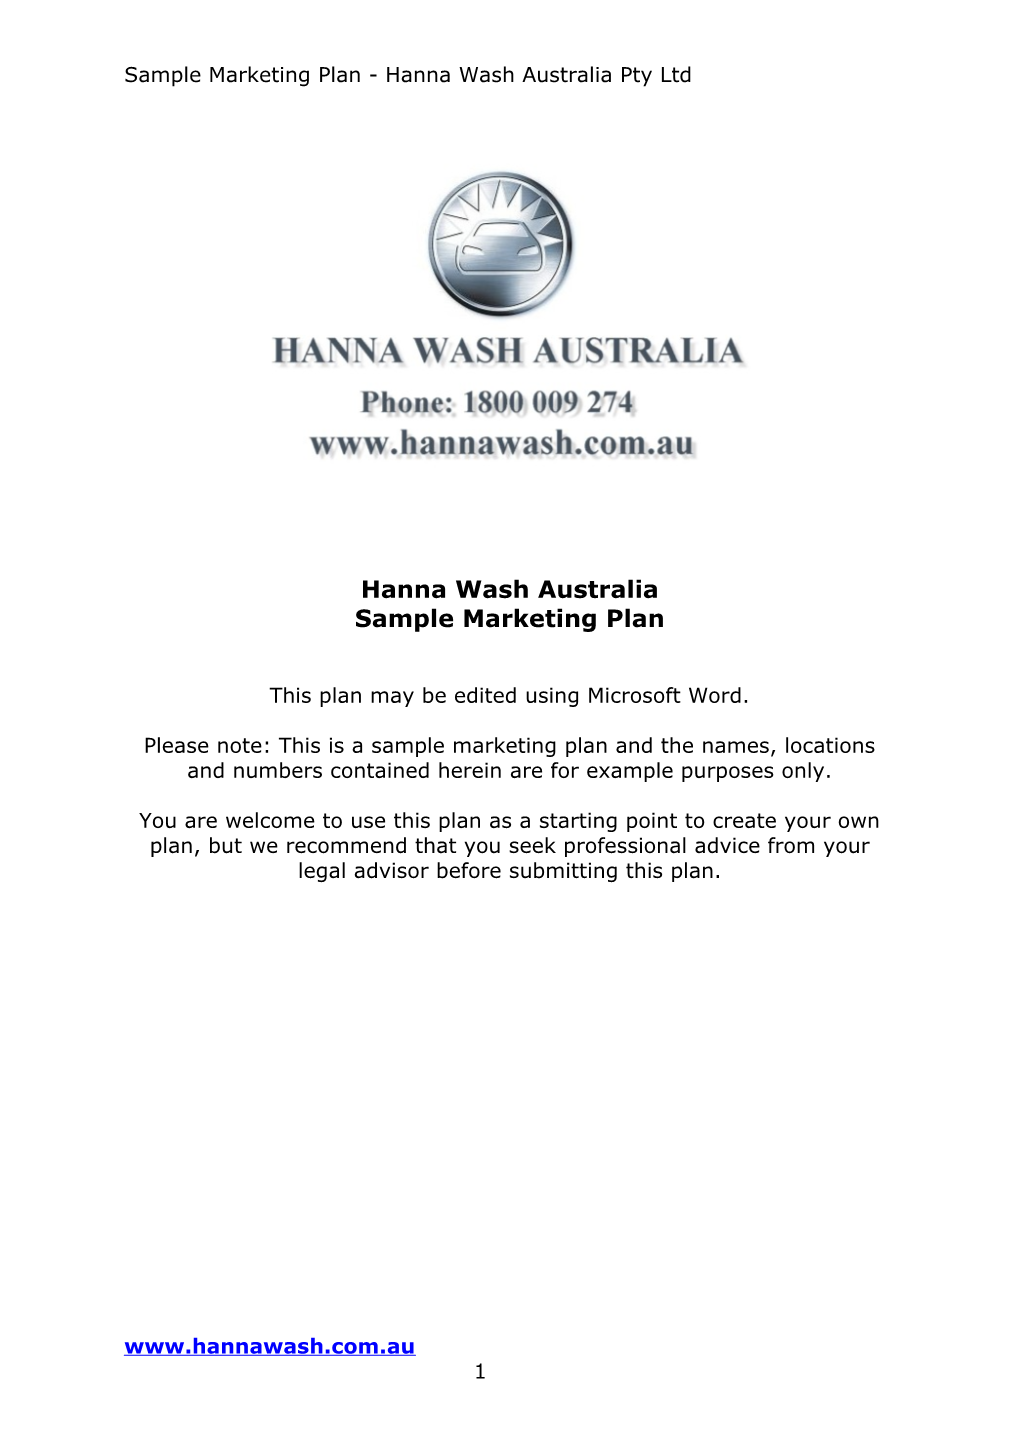 Sample Marketing Plan - Hanna Wash Australia Pty Ltd